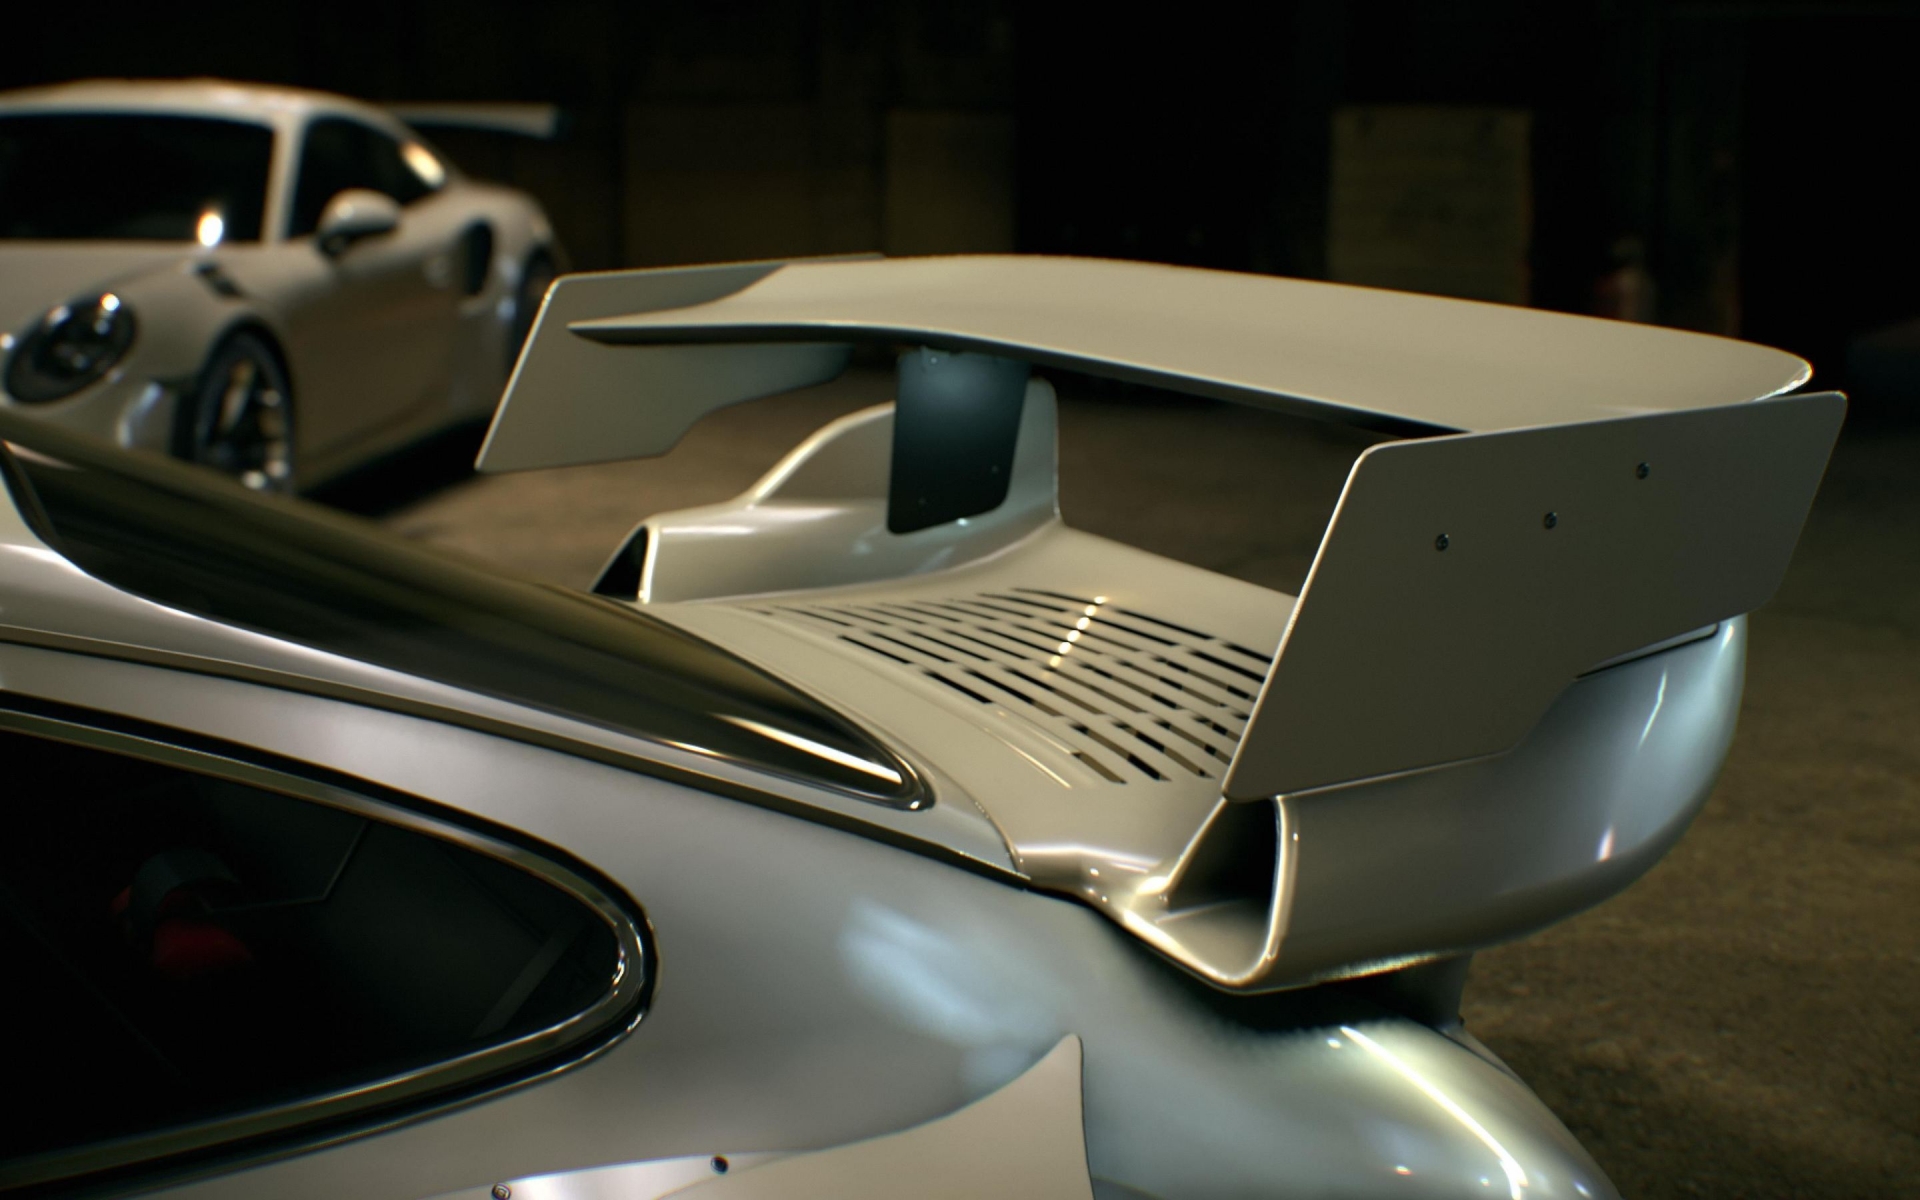 Need For Speed Porsche Spoiler for 1920 x 1200 widescreen resolution